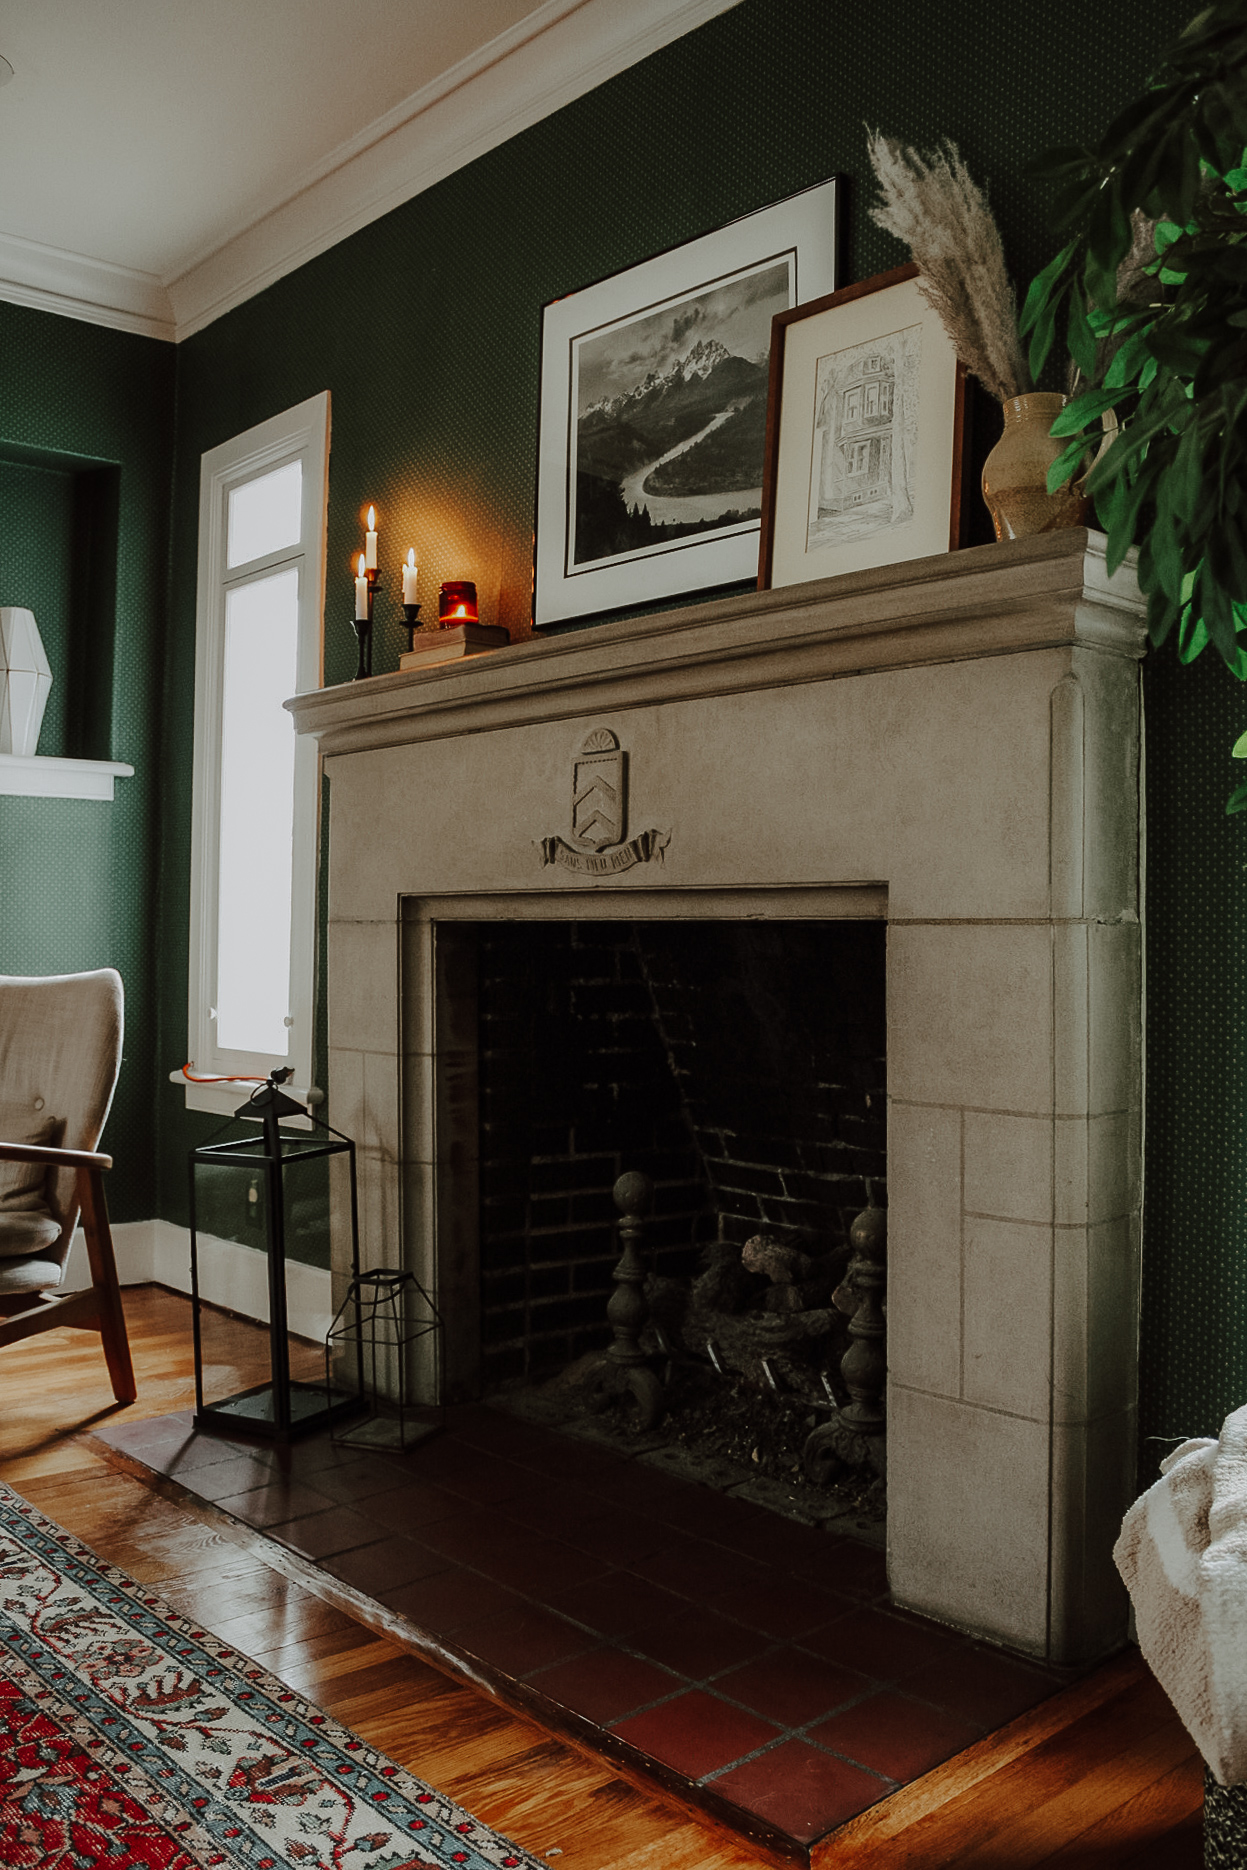 Green Living Room Reveal with Revival Rugs | Miranda Schroeder Blog

www.mirandaschroeder.com